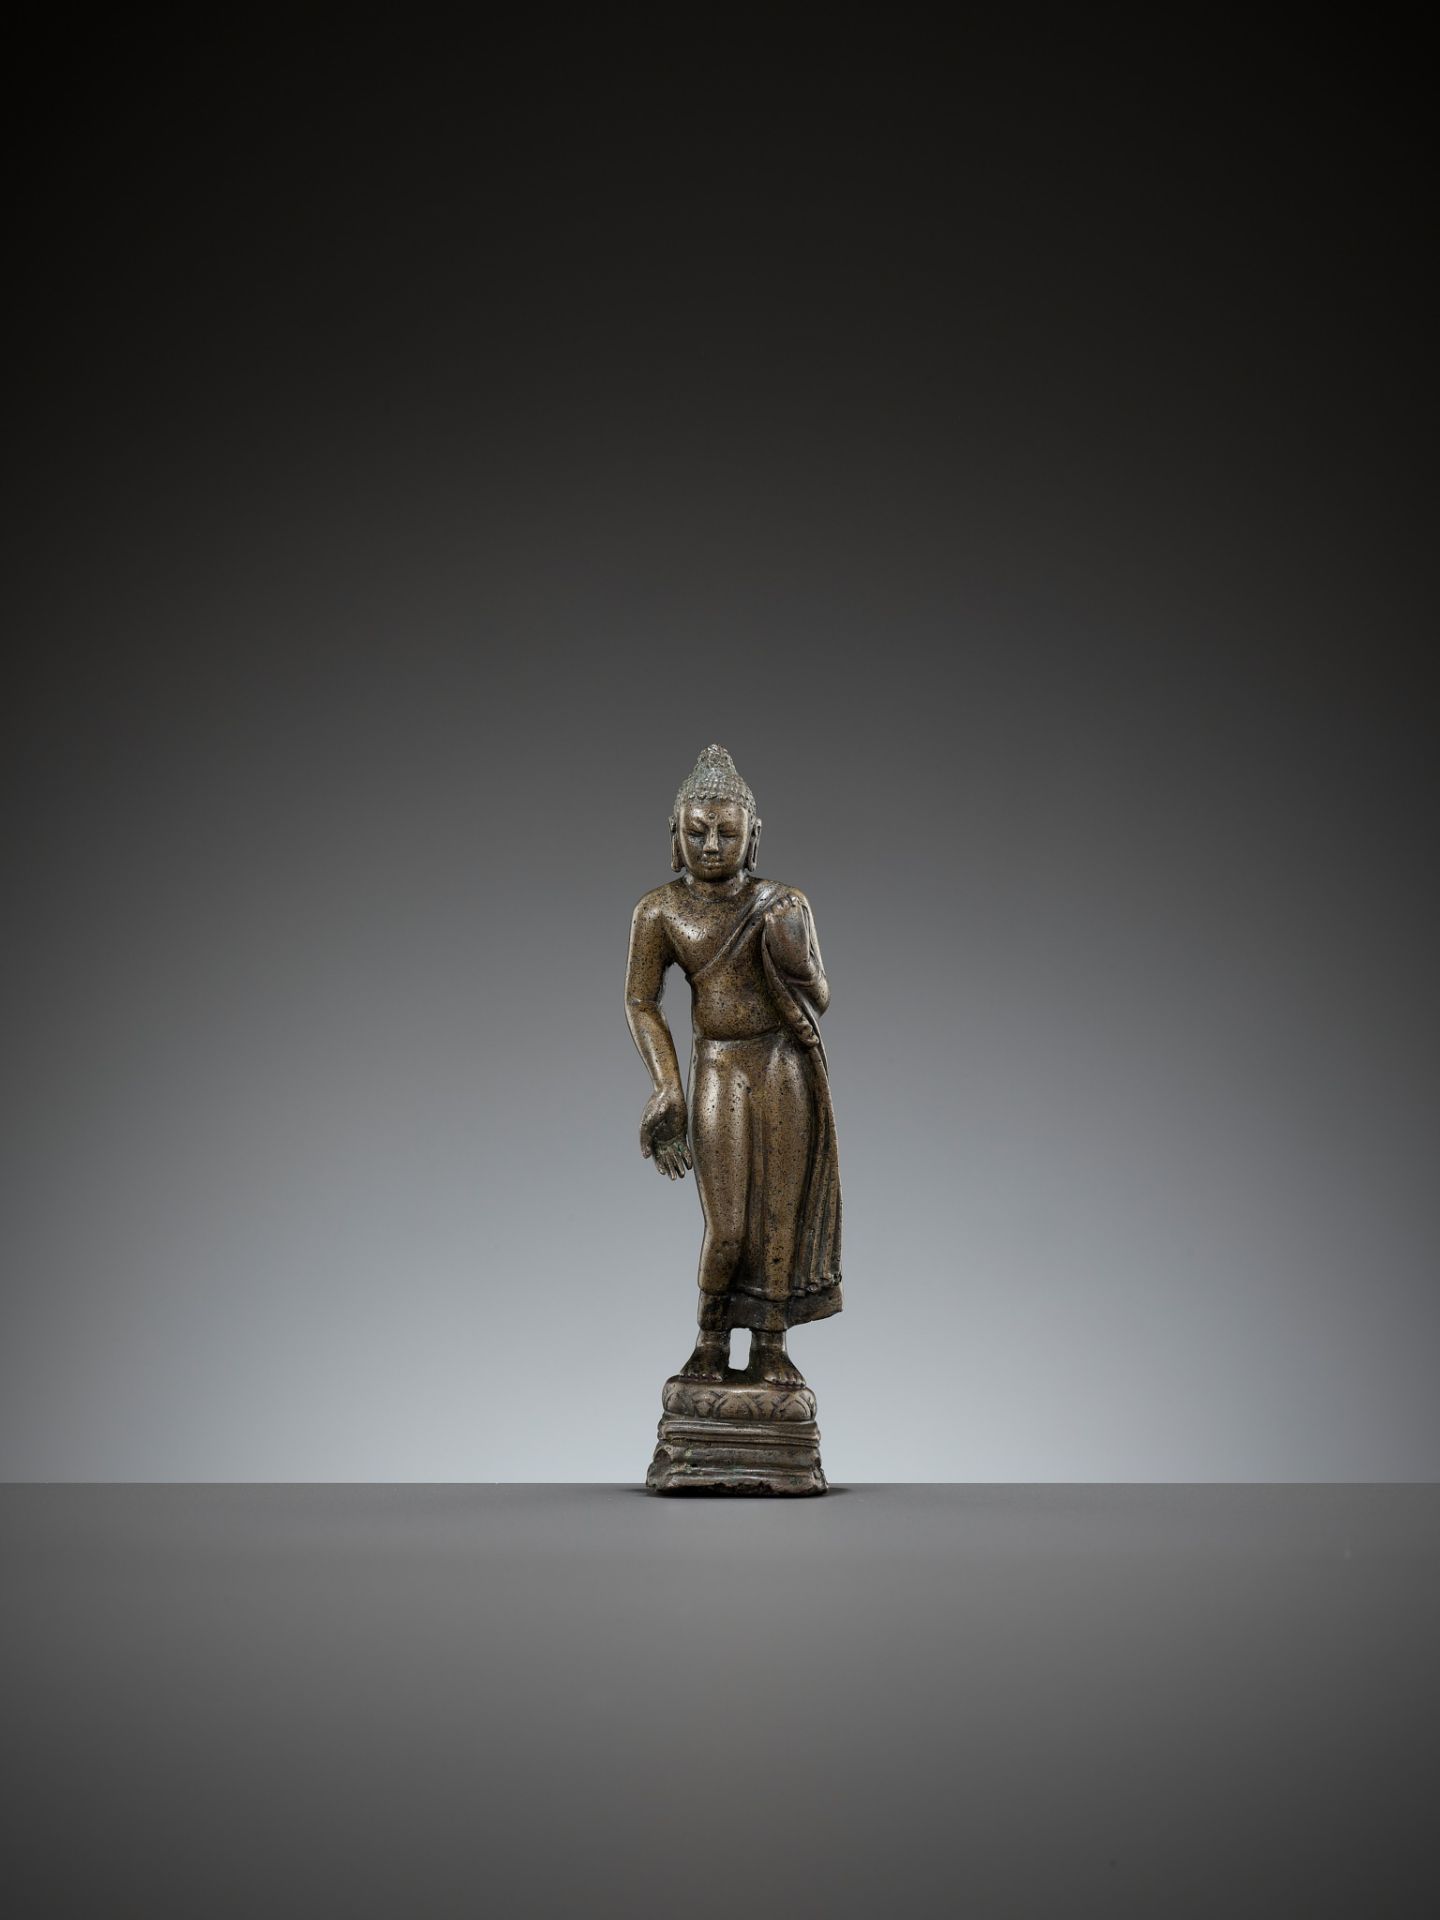 A BRONZE FIGURE OF A STANDING BUDDHA, POST-GUPTA PERIOD, INDIA, C. 7TH CENTURY - Image 2 of 15